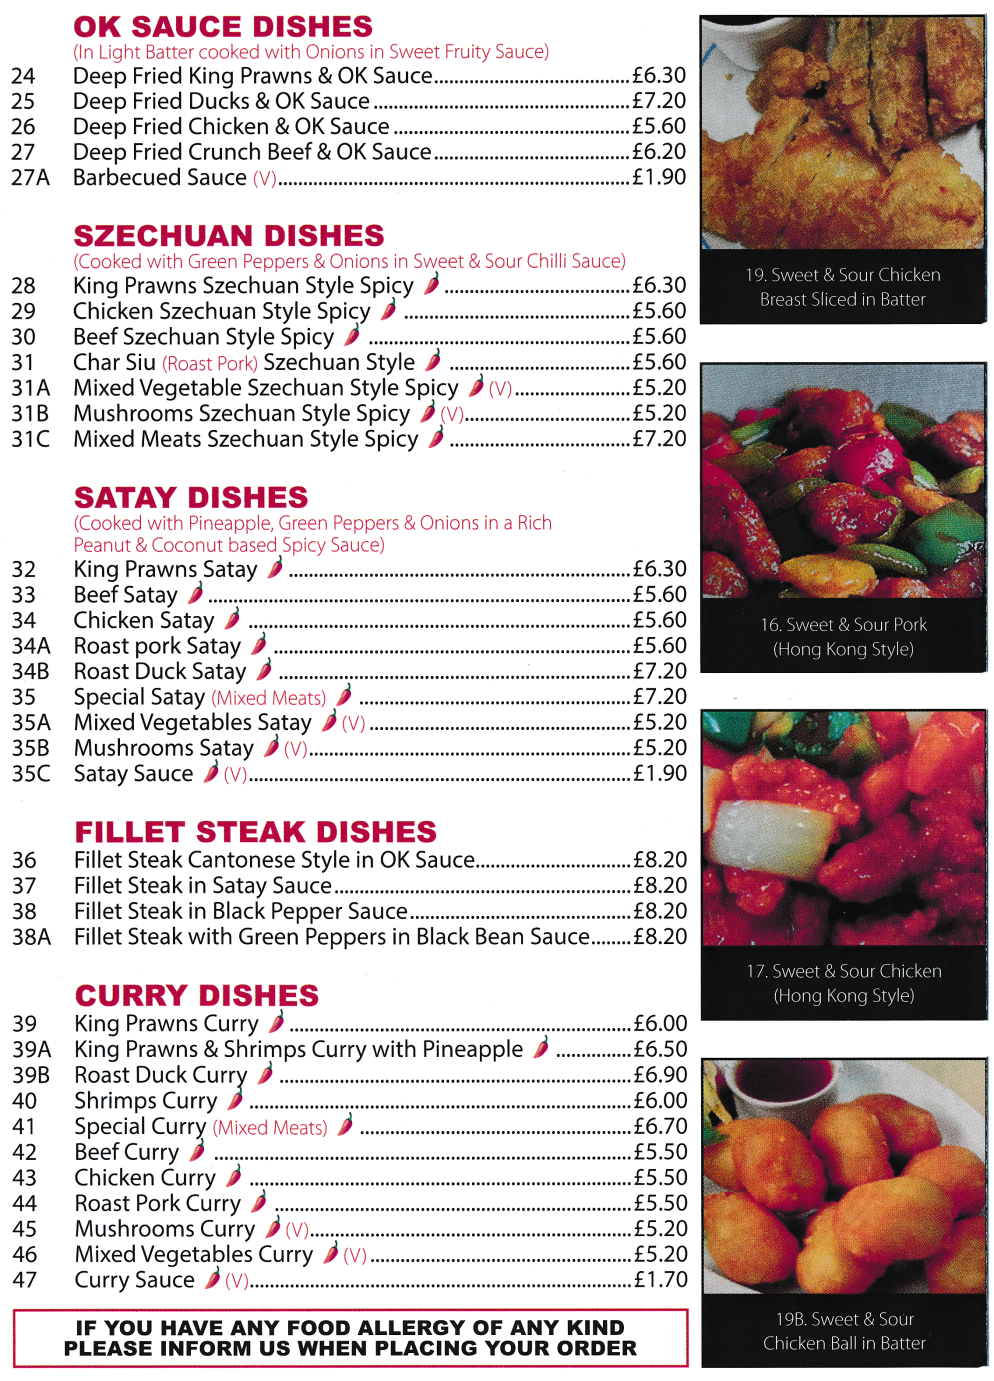 Takeaway menu for Jade Garden (Beef Satay, Deep Fried Duck & OK Sauce, Chicken Curry, Mixed Meats Szechaun Style Spicy..)